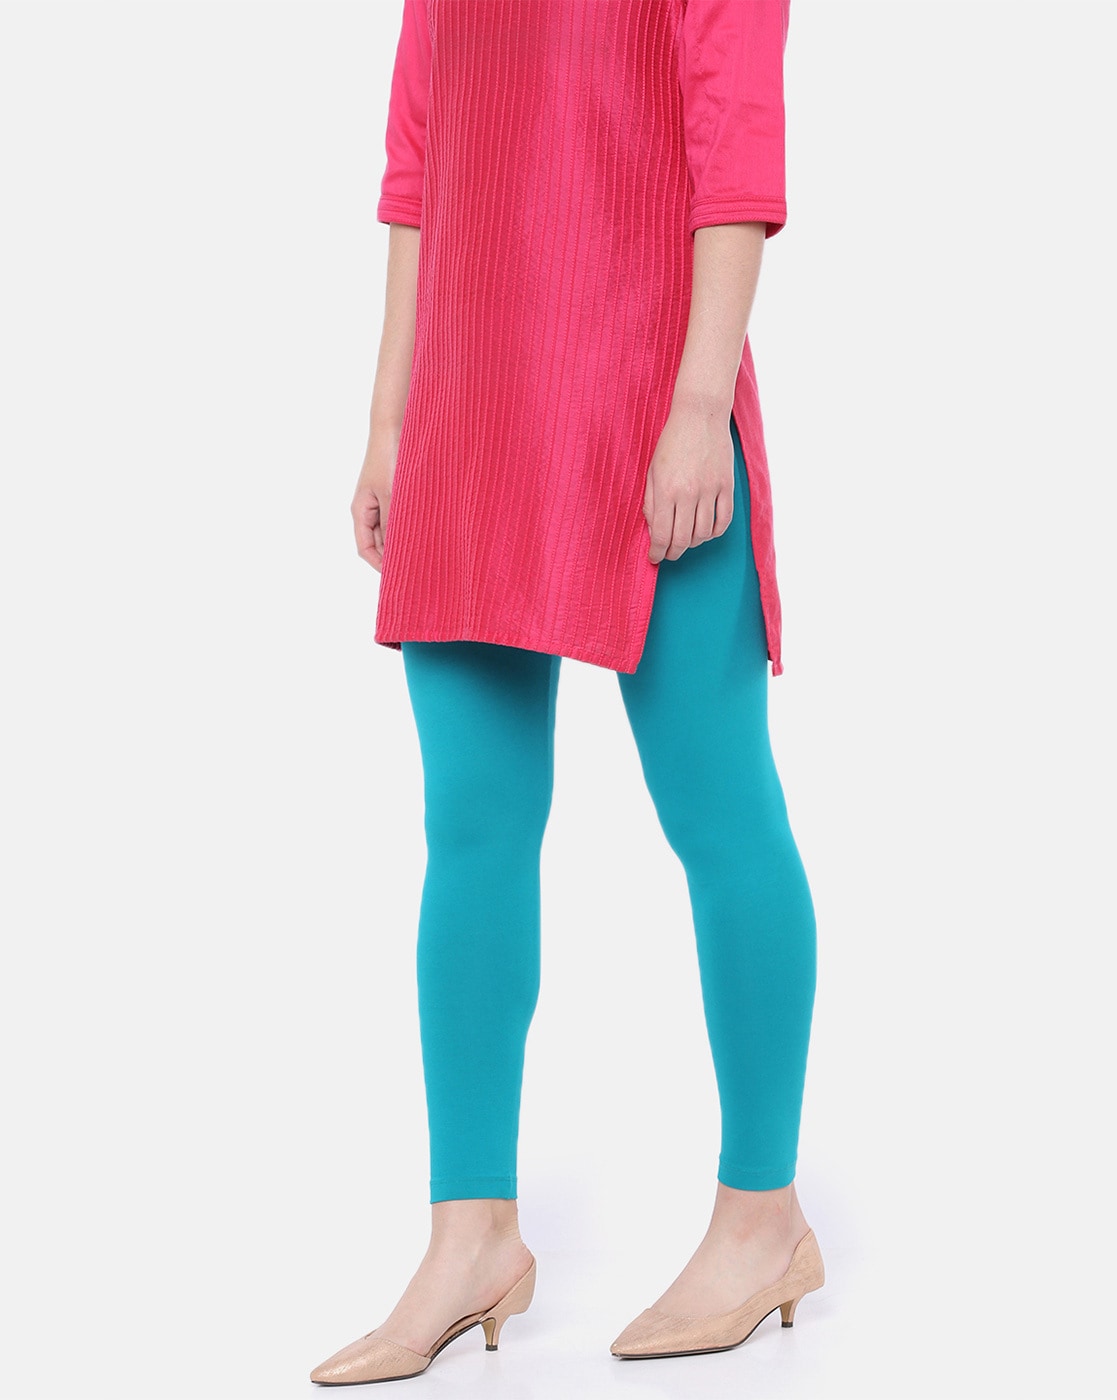 Buy Multicoloured Leggings for Girls by ZION Online | Ajio.com